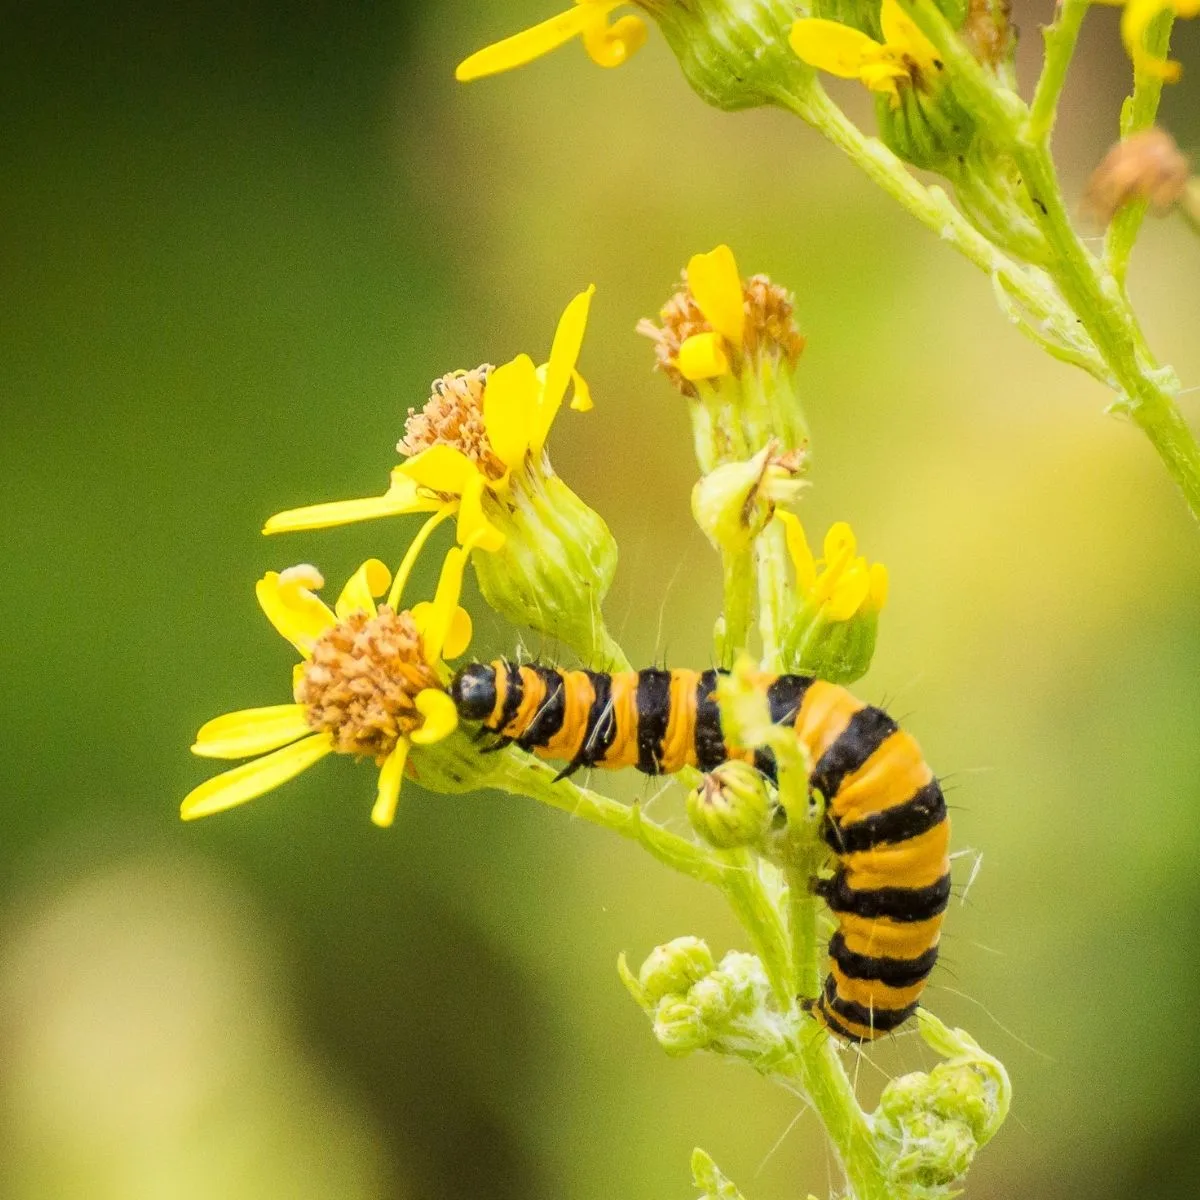 striped caterpillar on yellow flowers